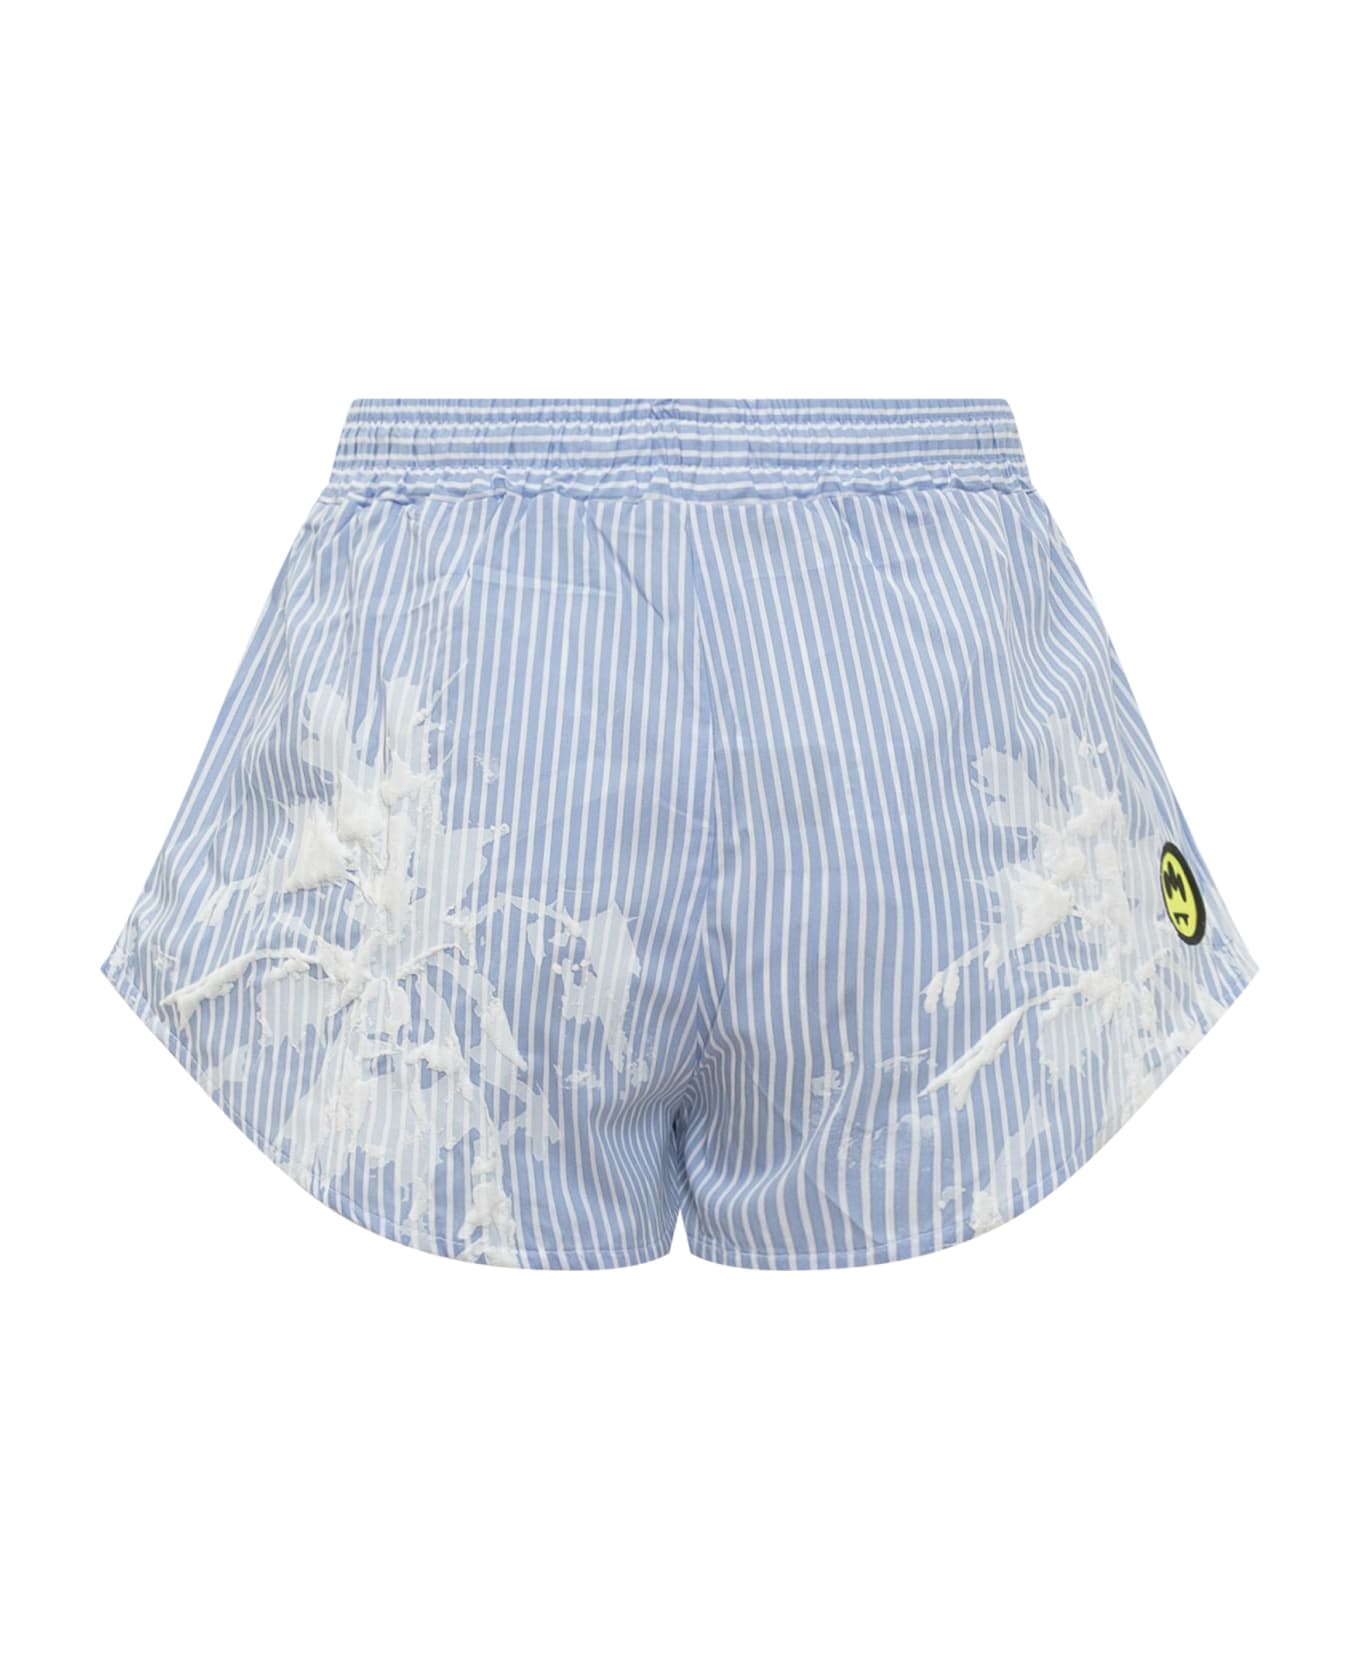 Barrow 3d Palm Shorts - CELESTE/LIGHT BLUE